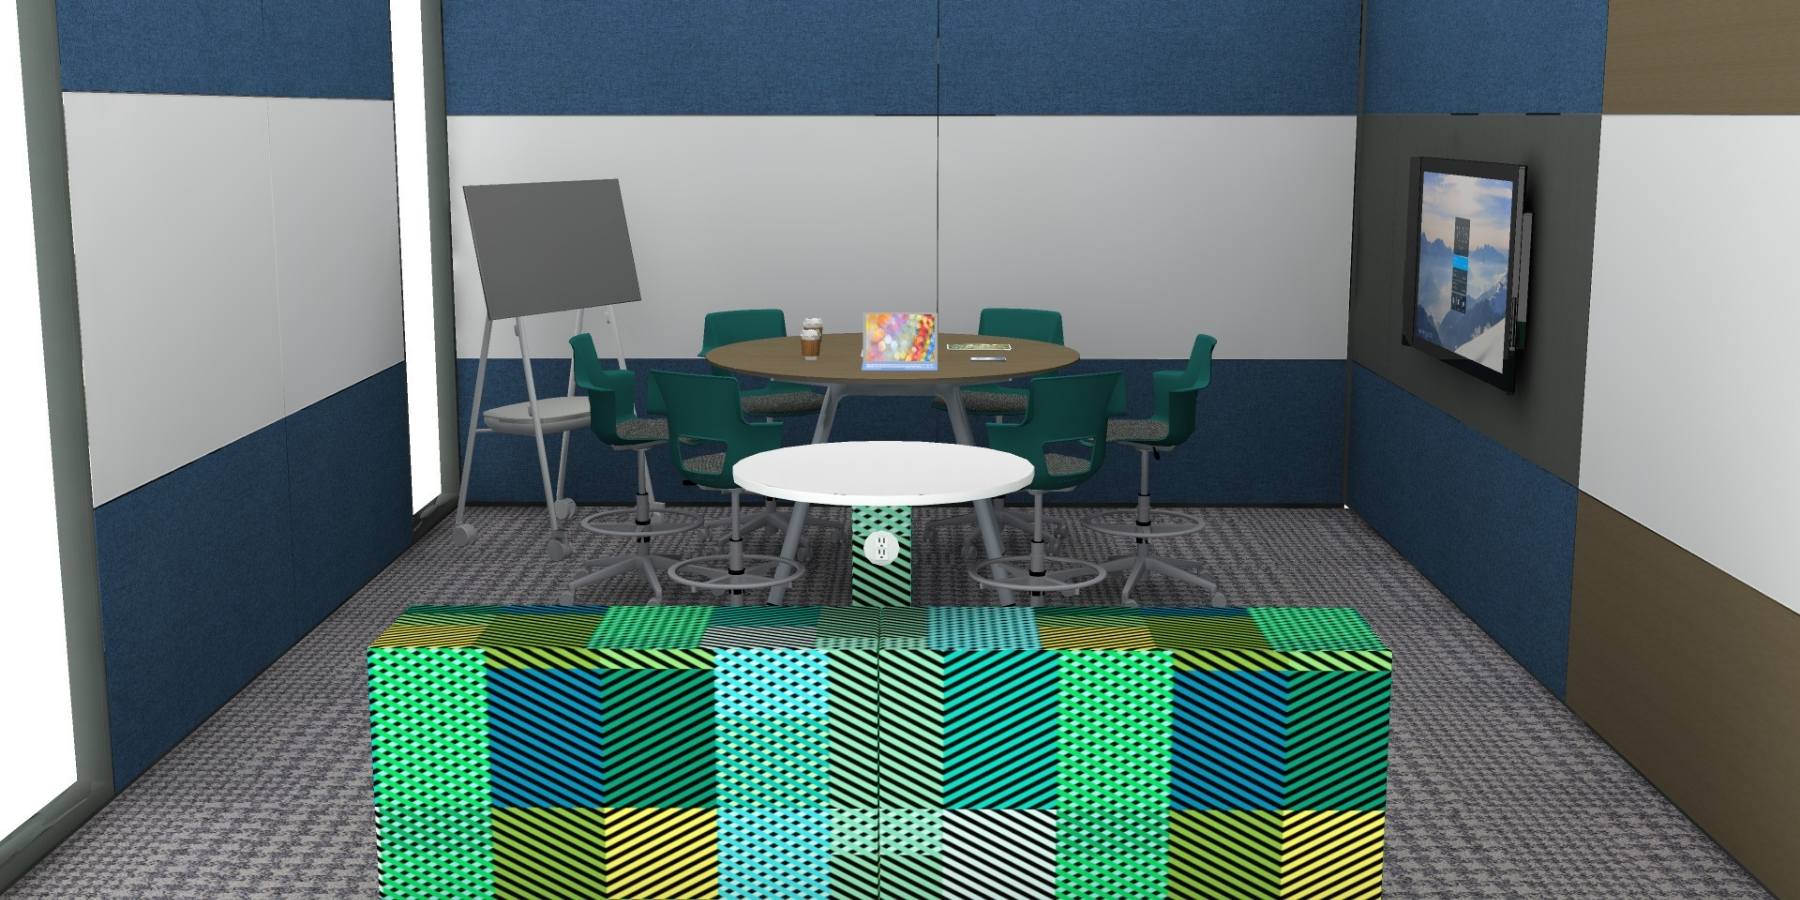  3-wall semi-enclosed meeting space 